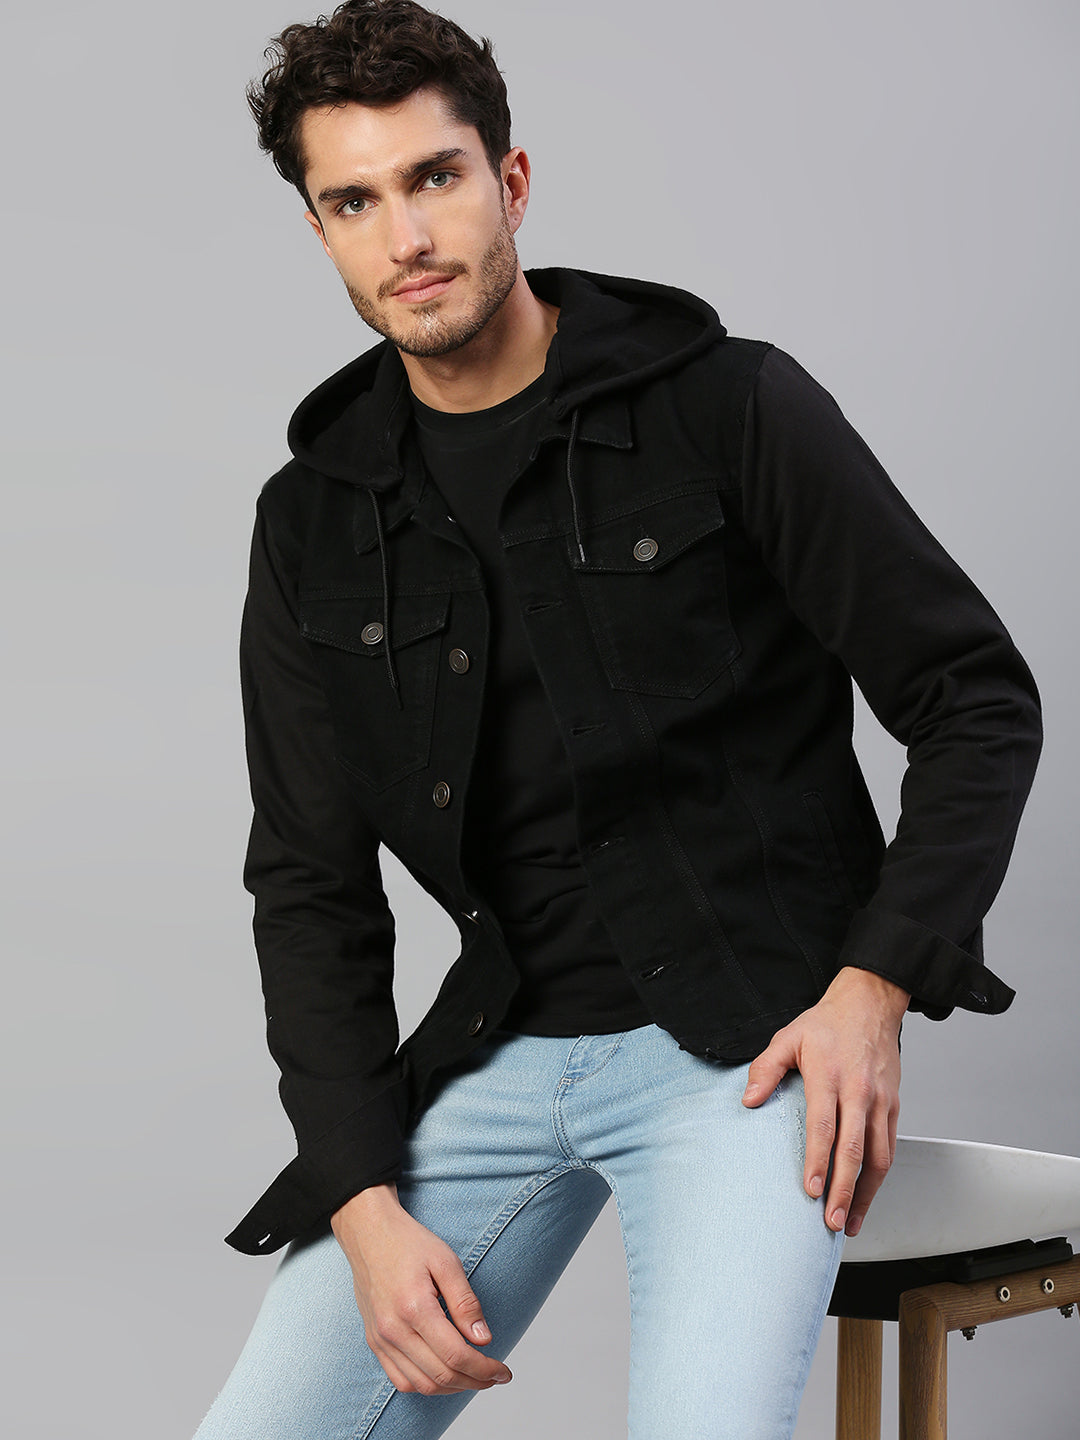 Buy Men Black Solid Casual Jacket Online - 715304 | Peter England